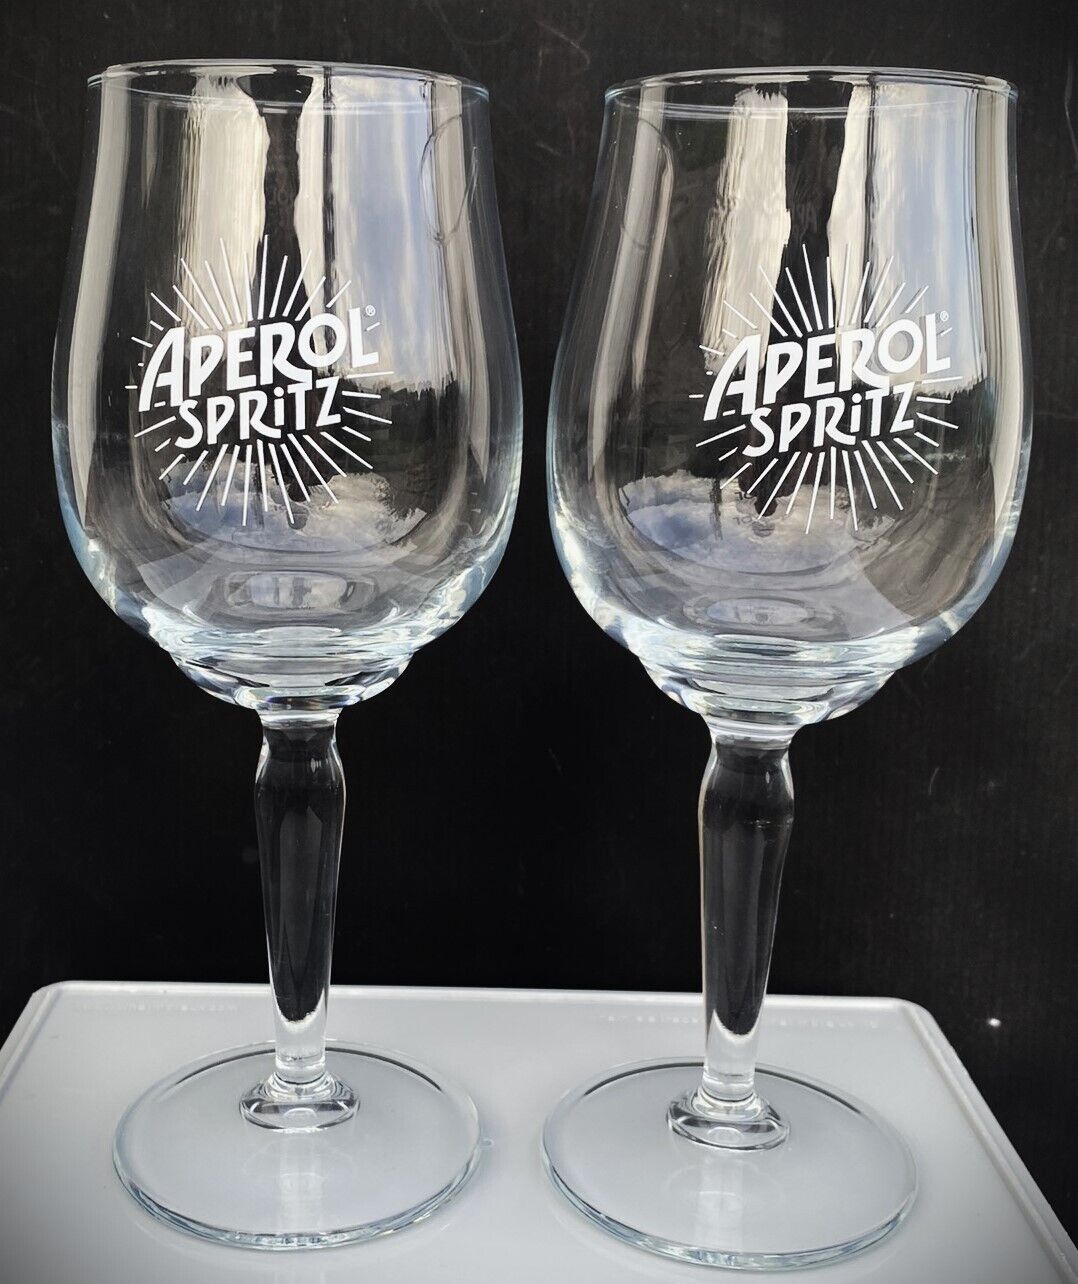 2 x Aperol Spritz Cocktail Glass  - Brand New  - 45cl / 450ml